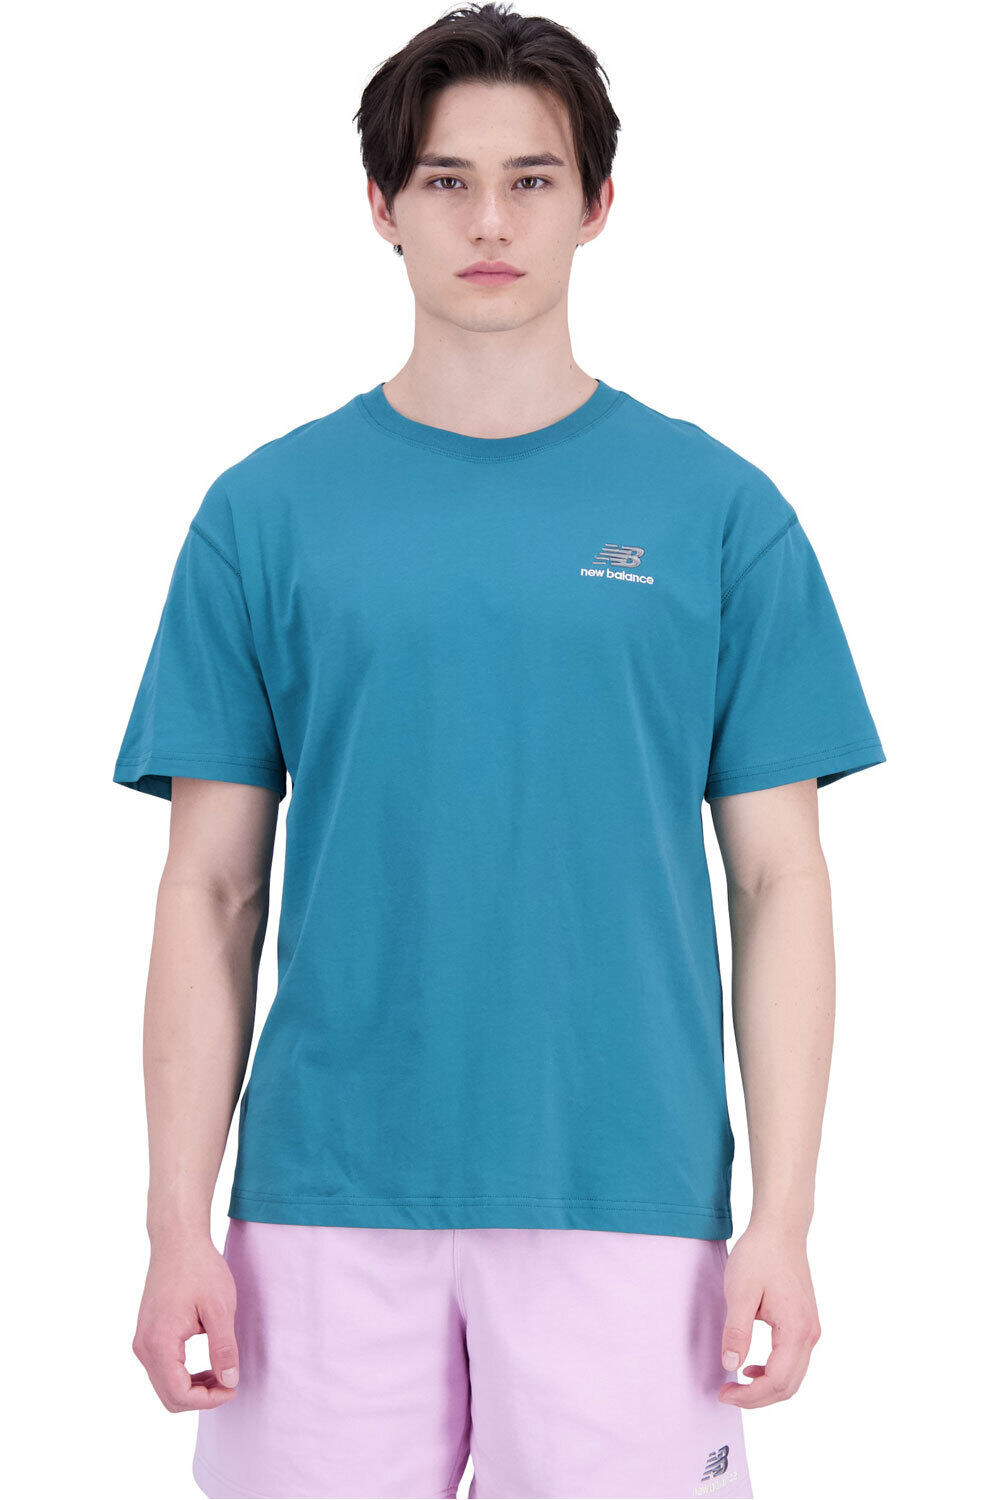 New Balance camiseta manga corta hombre Uni-ssentials Cotton Tee vista frontal